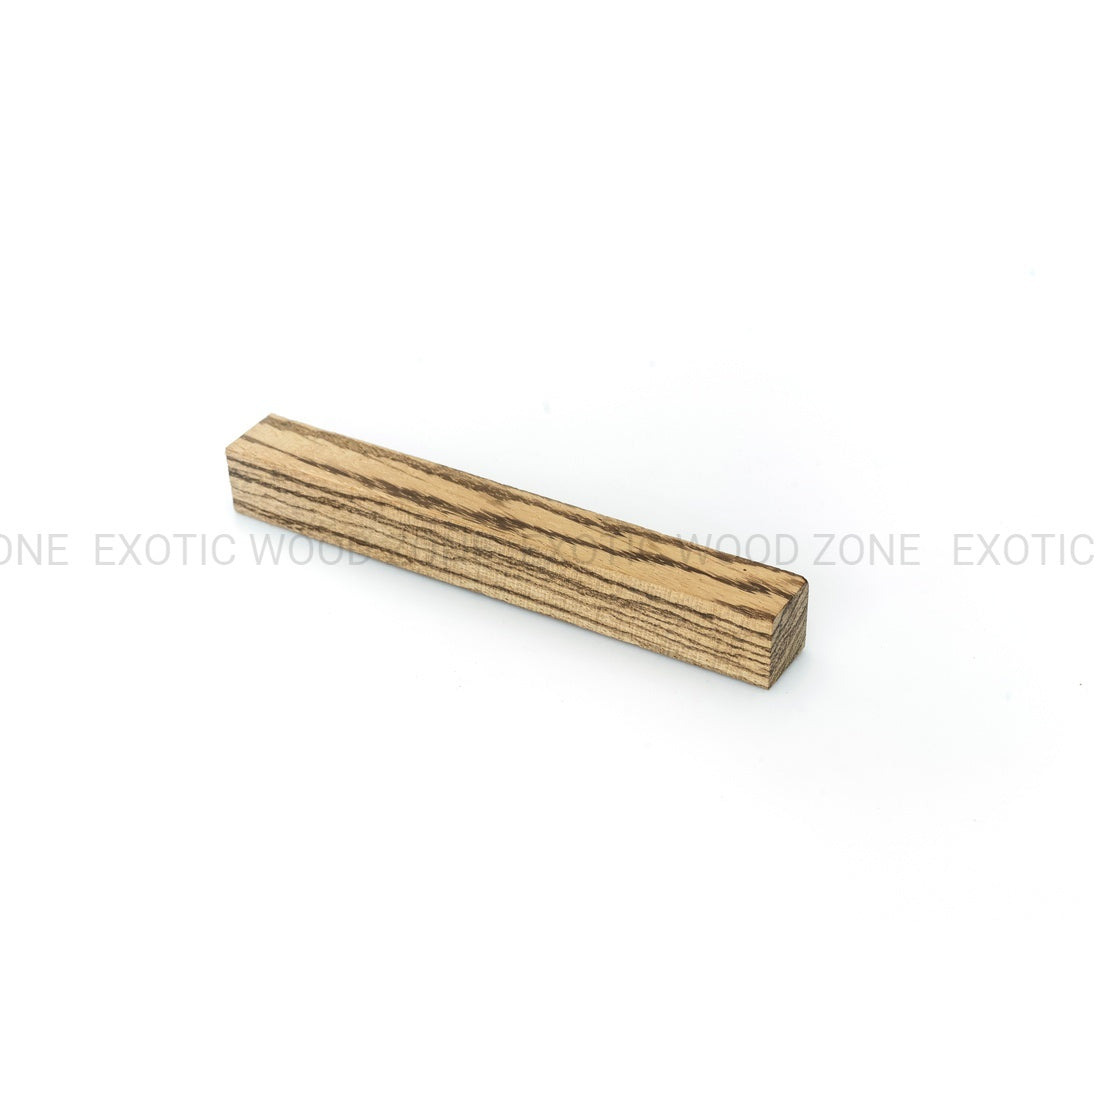 Zebrawood Pen Blanks - Exotic Wood Zone - Buy online Across USA 